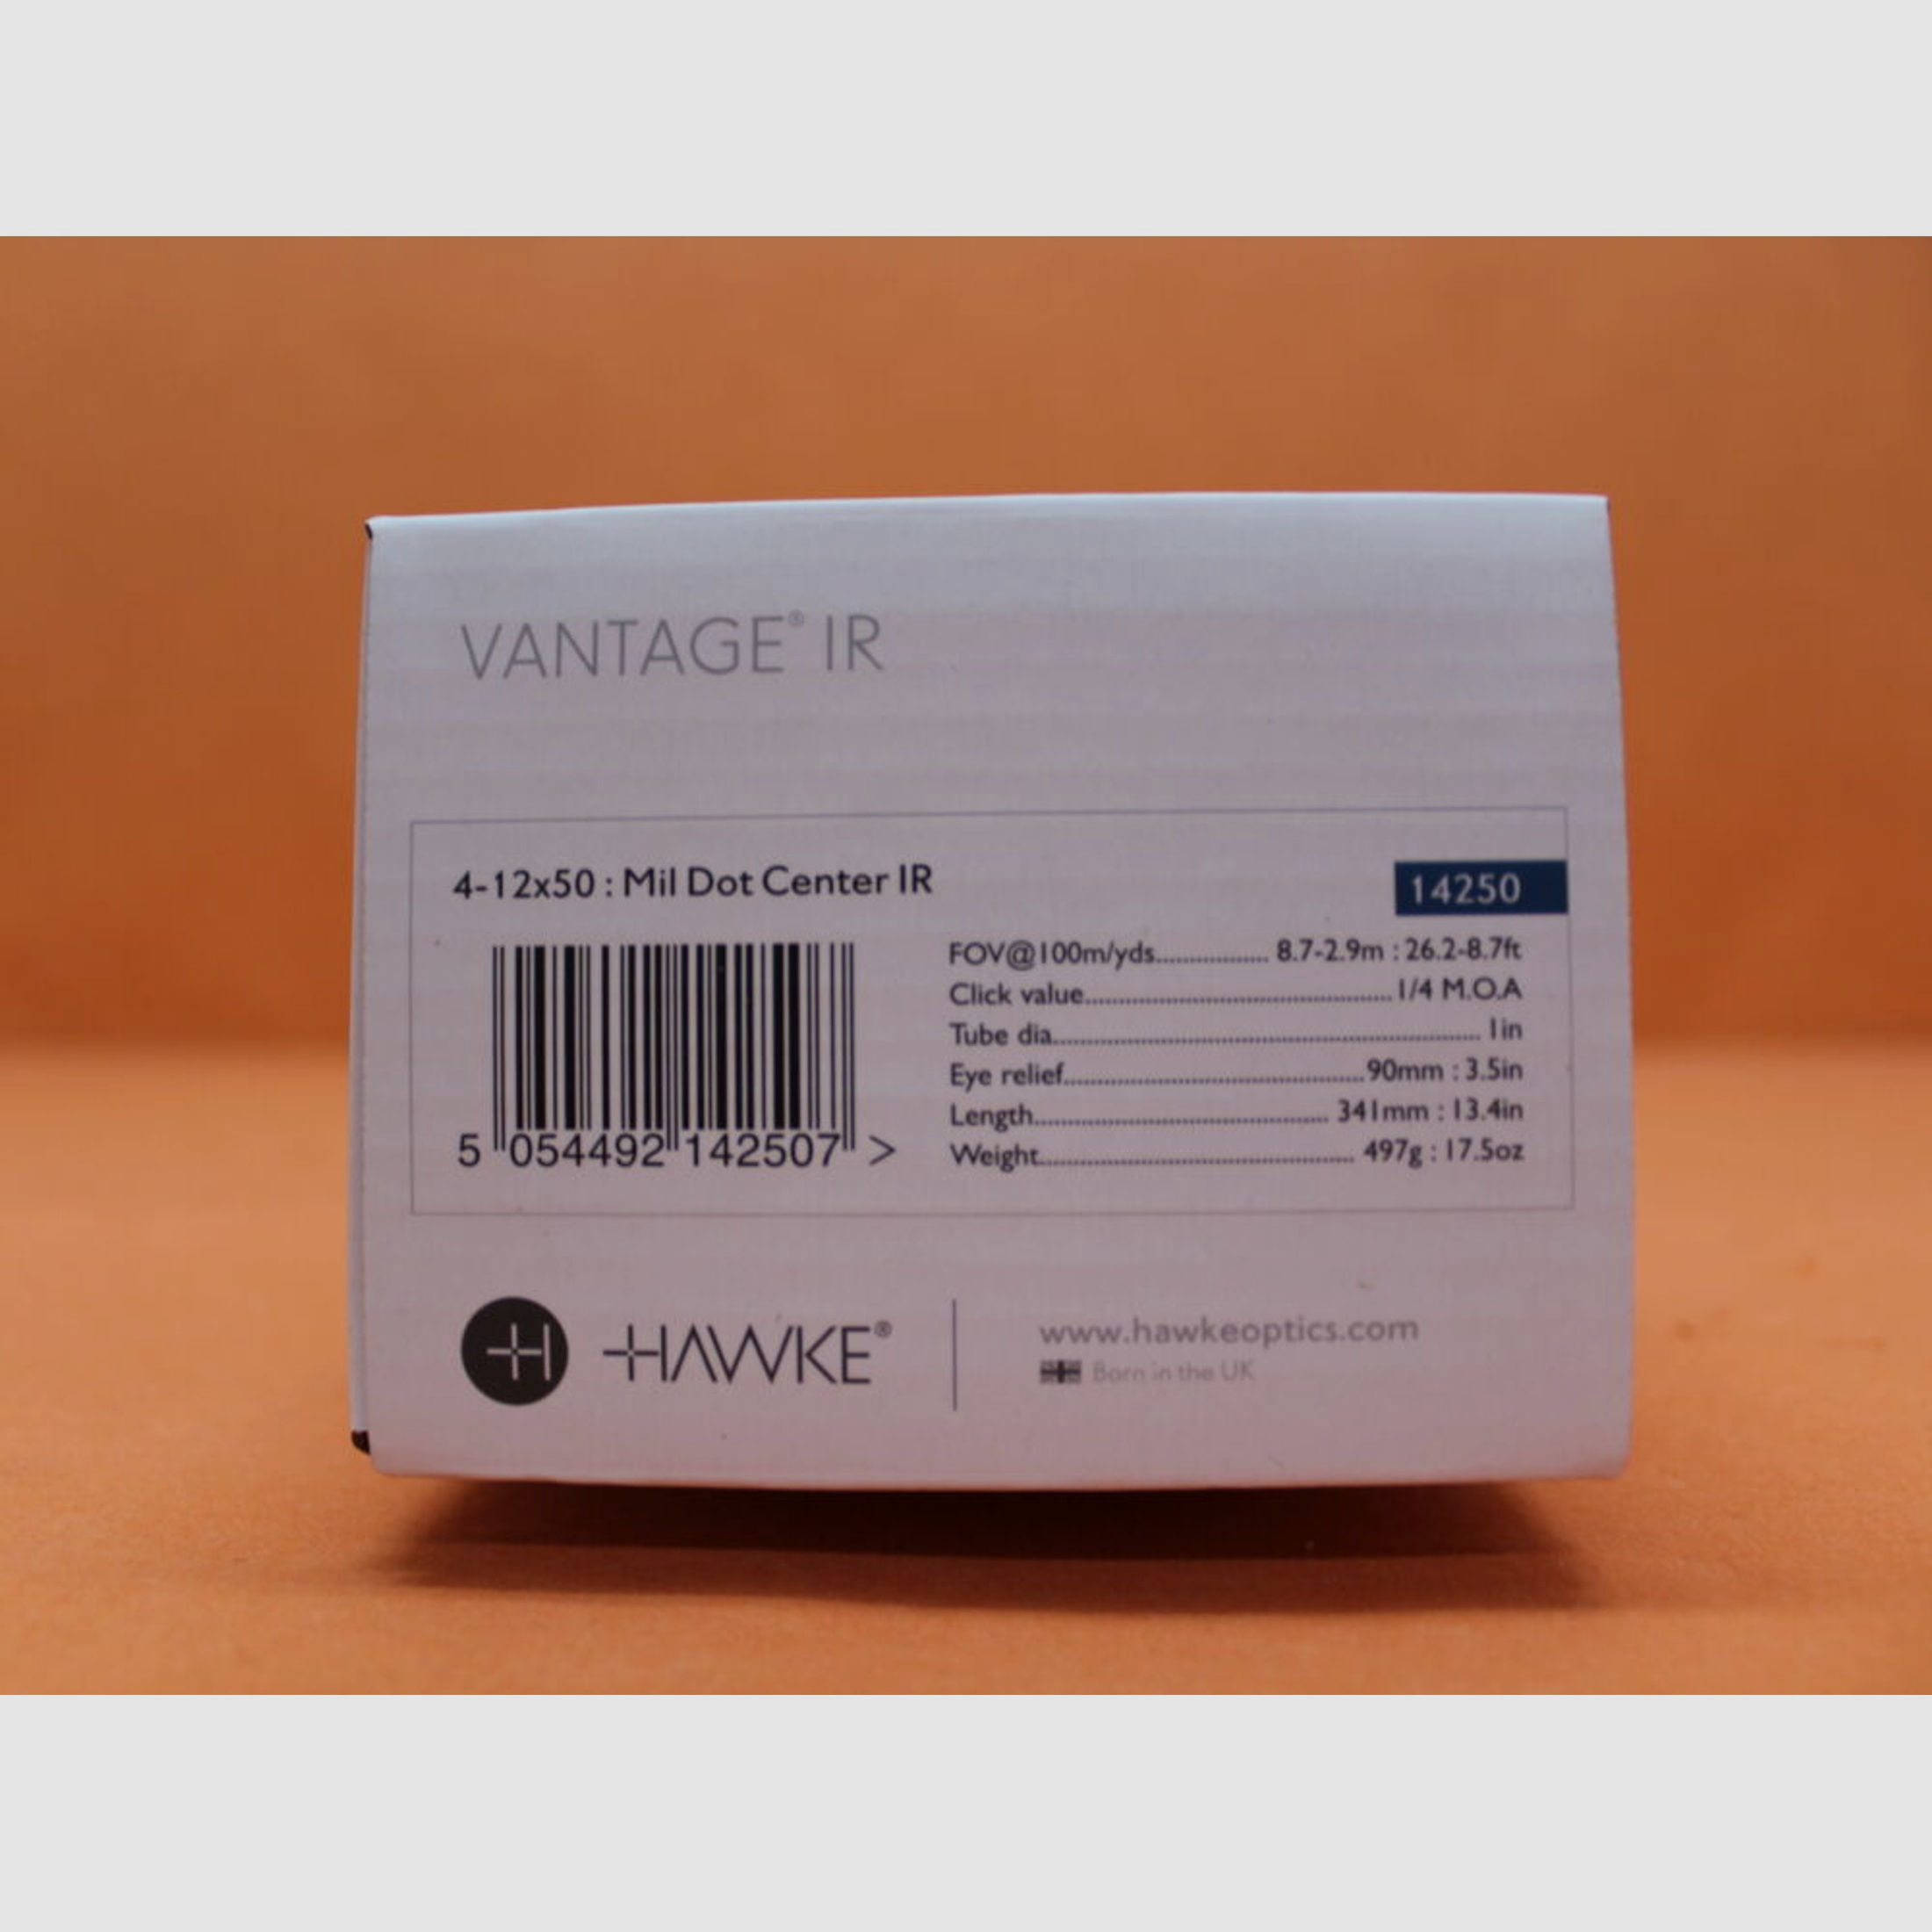 HAWKE	 HAWKE Vantage IR Zielfernrohr 4-12x50 (14250) MilDot IR Leuchtbsehen (2.BE) 1/4MOA Click